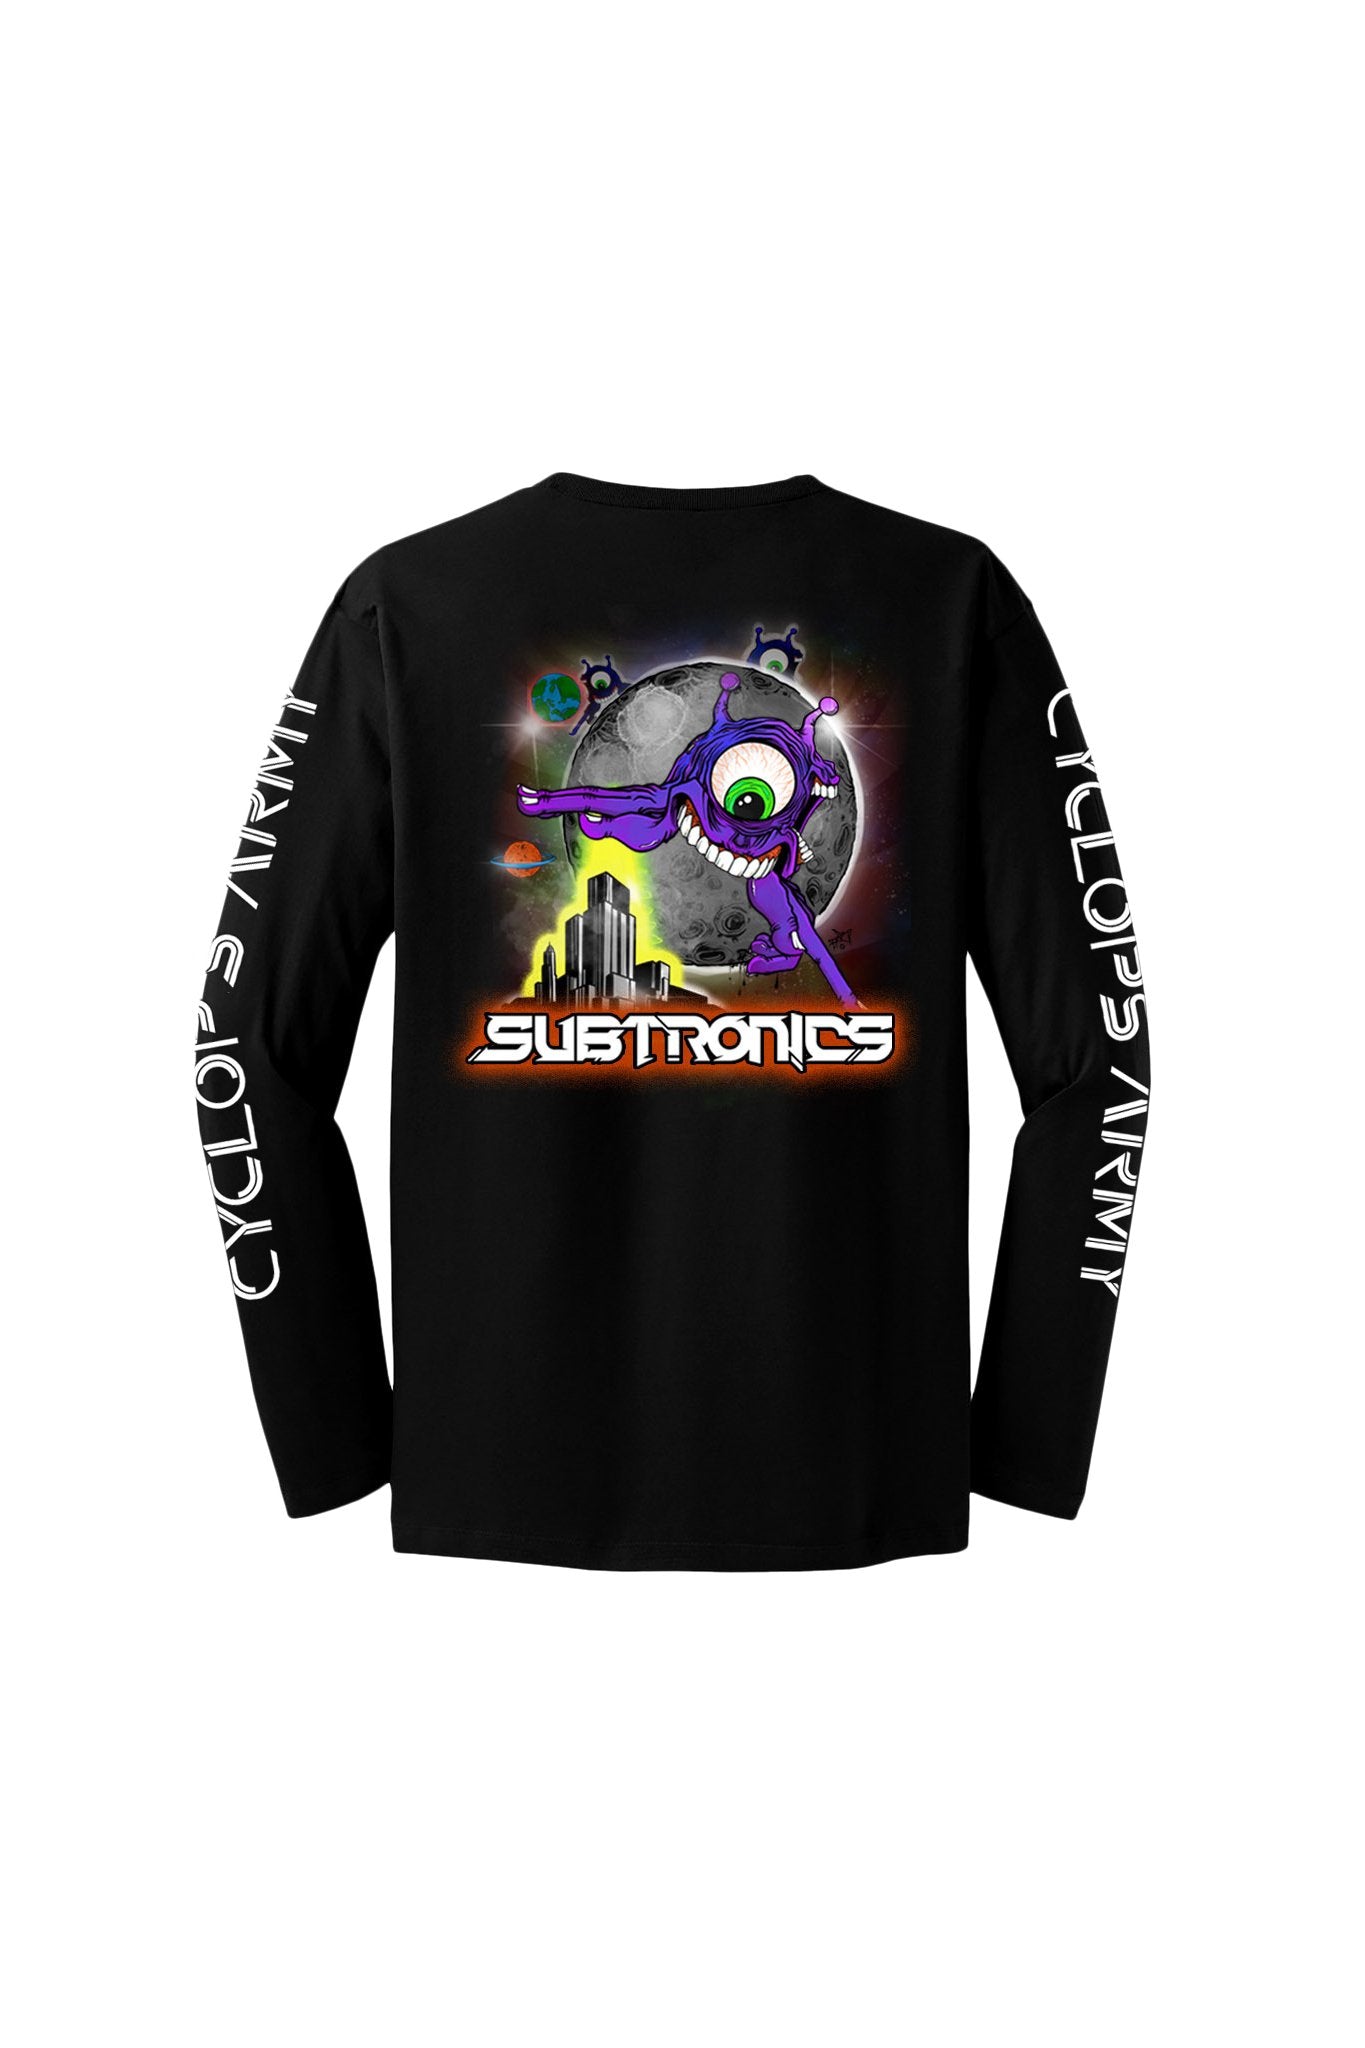 Subtronics - Cyclops Army - Black Long Sleeve